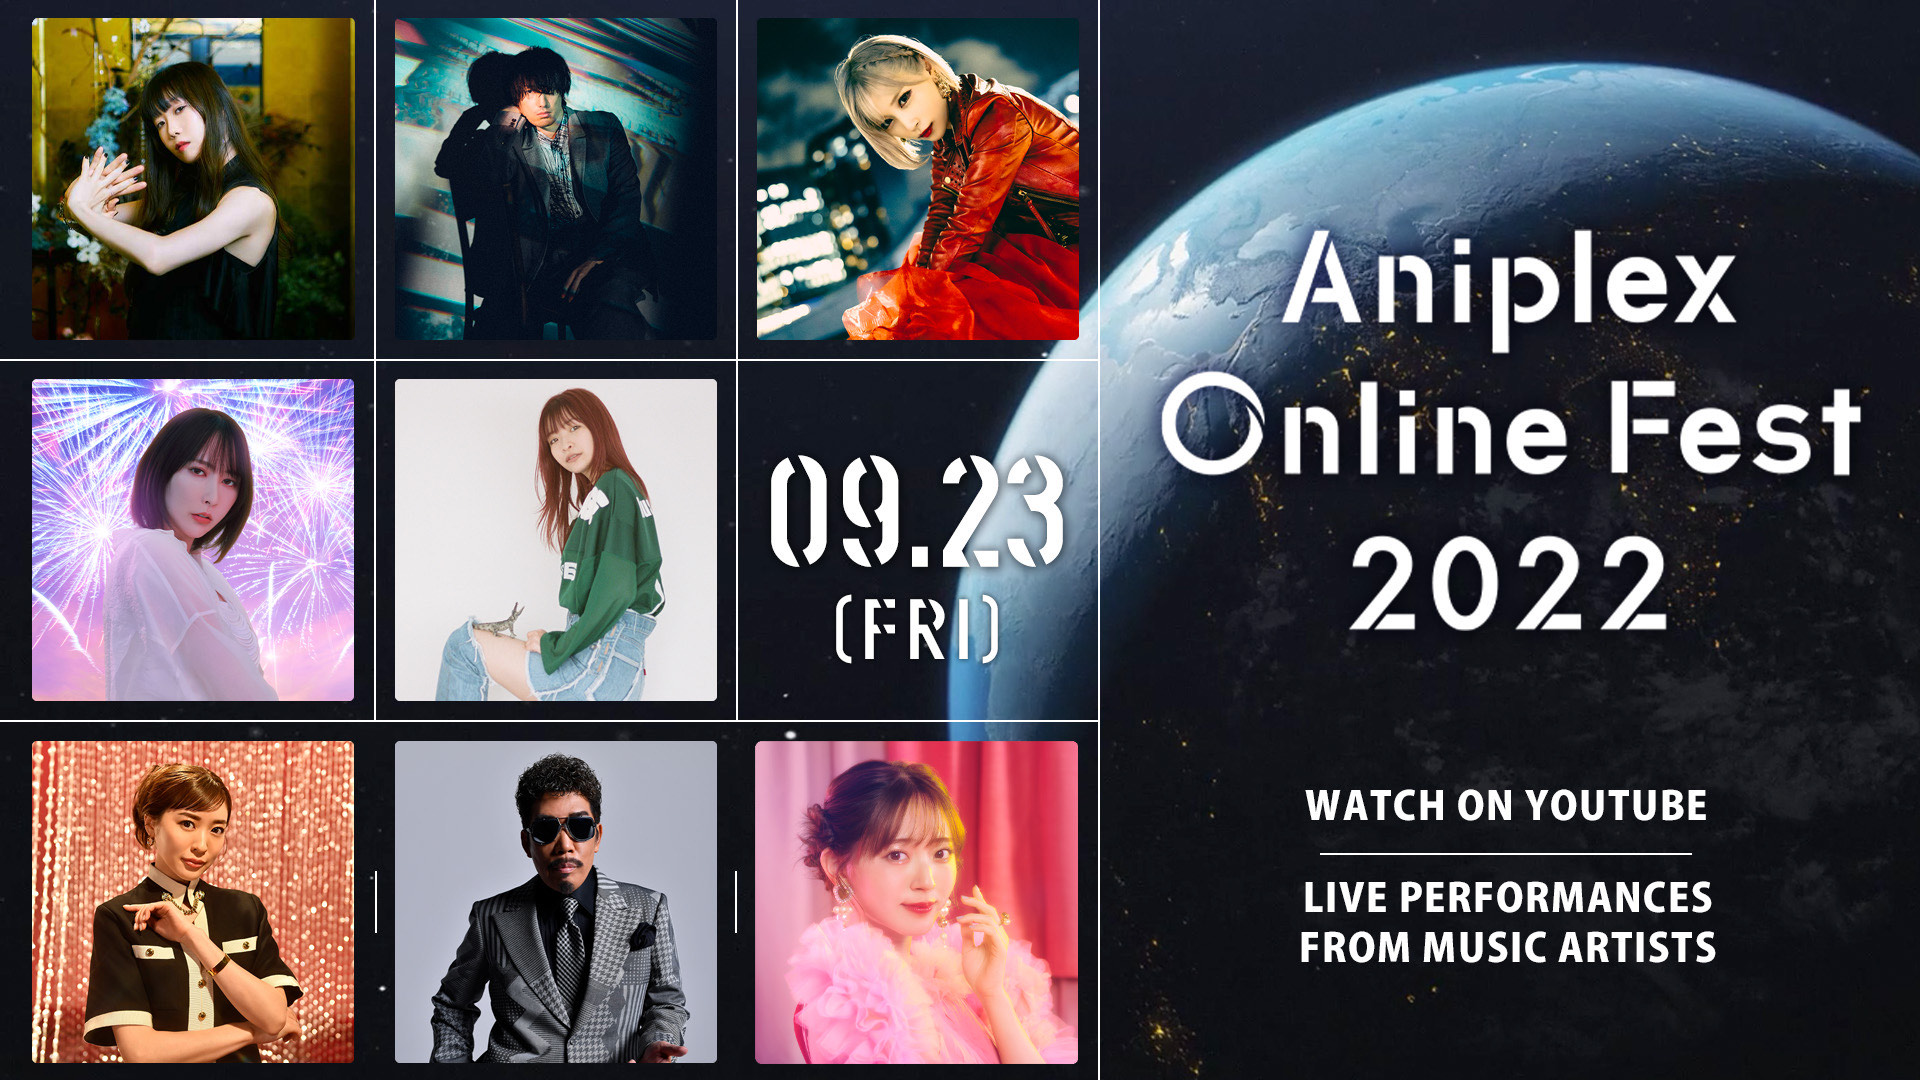 Aniplex Online Fest 2022